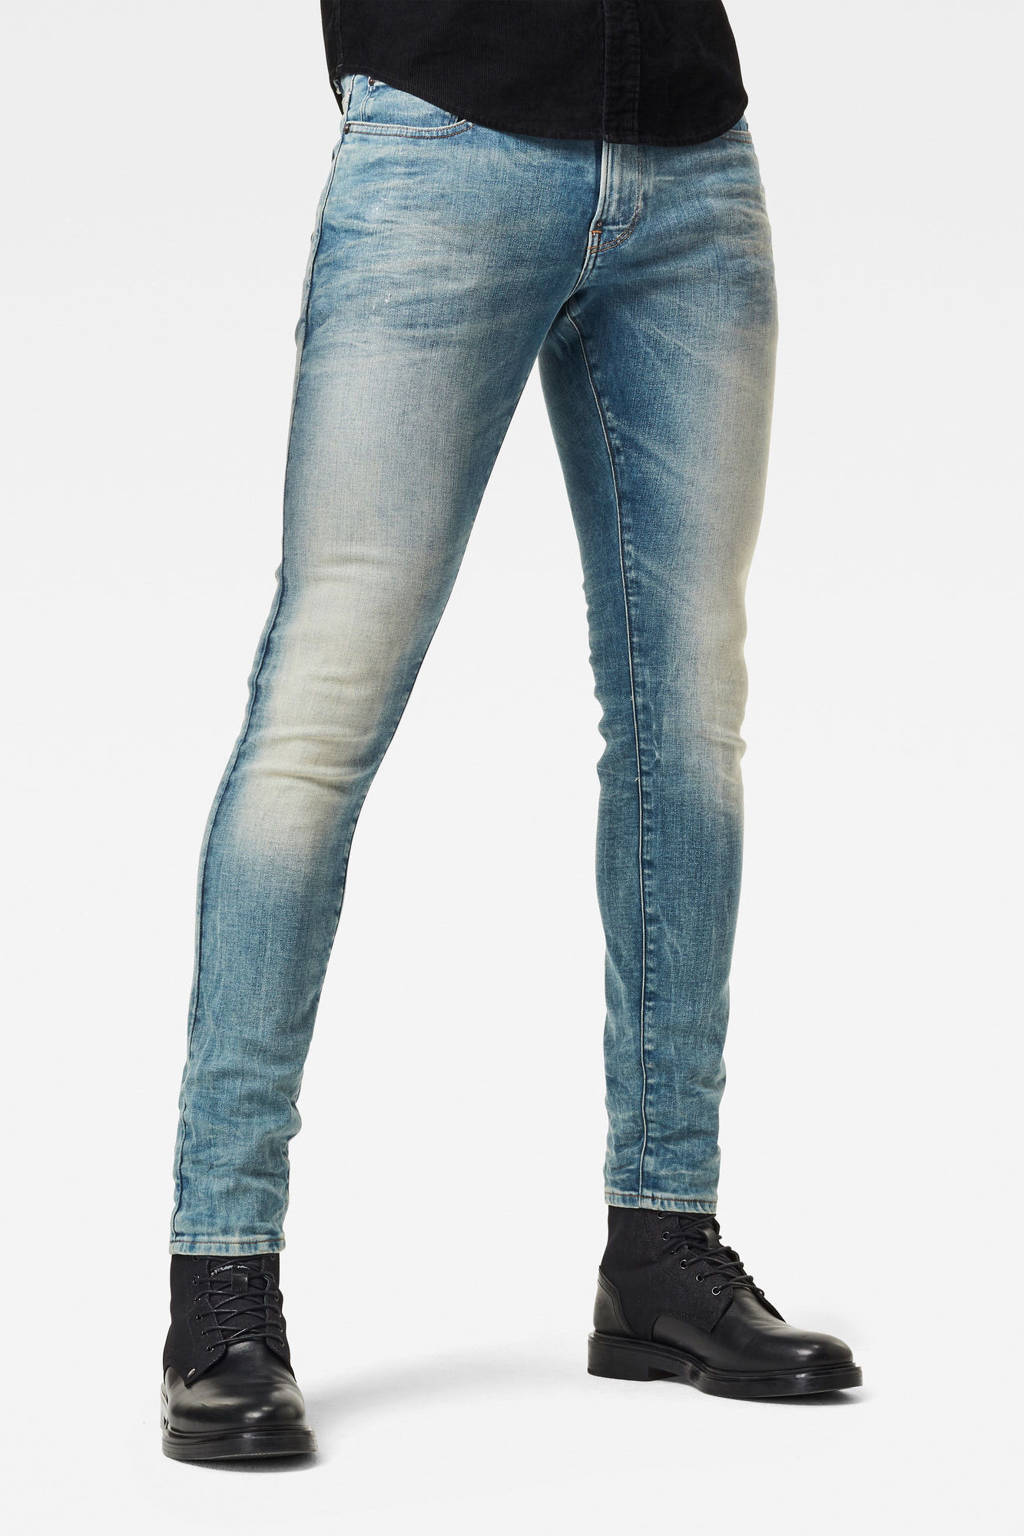 G-Star RAW Revend skinny jeans B990/antic faded kyanite